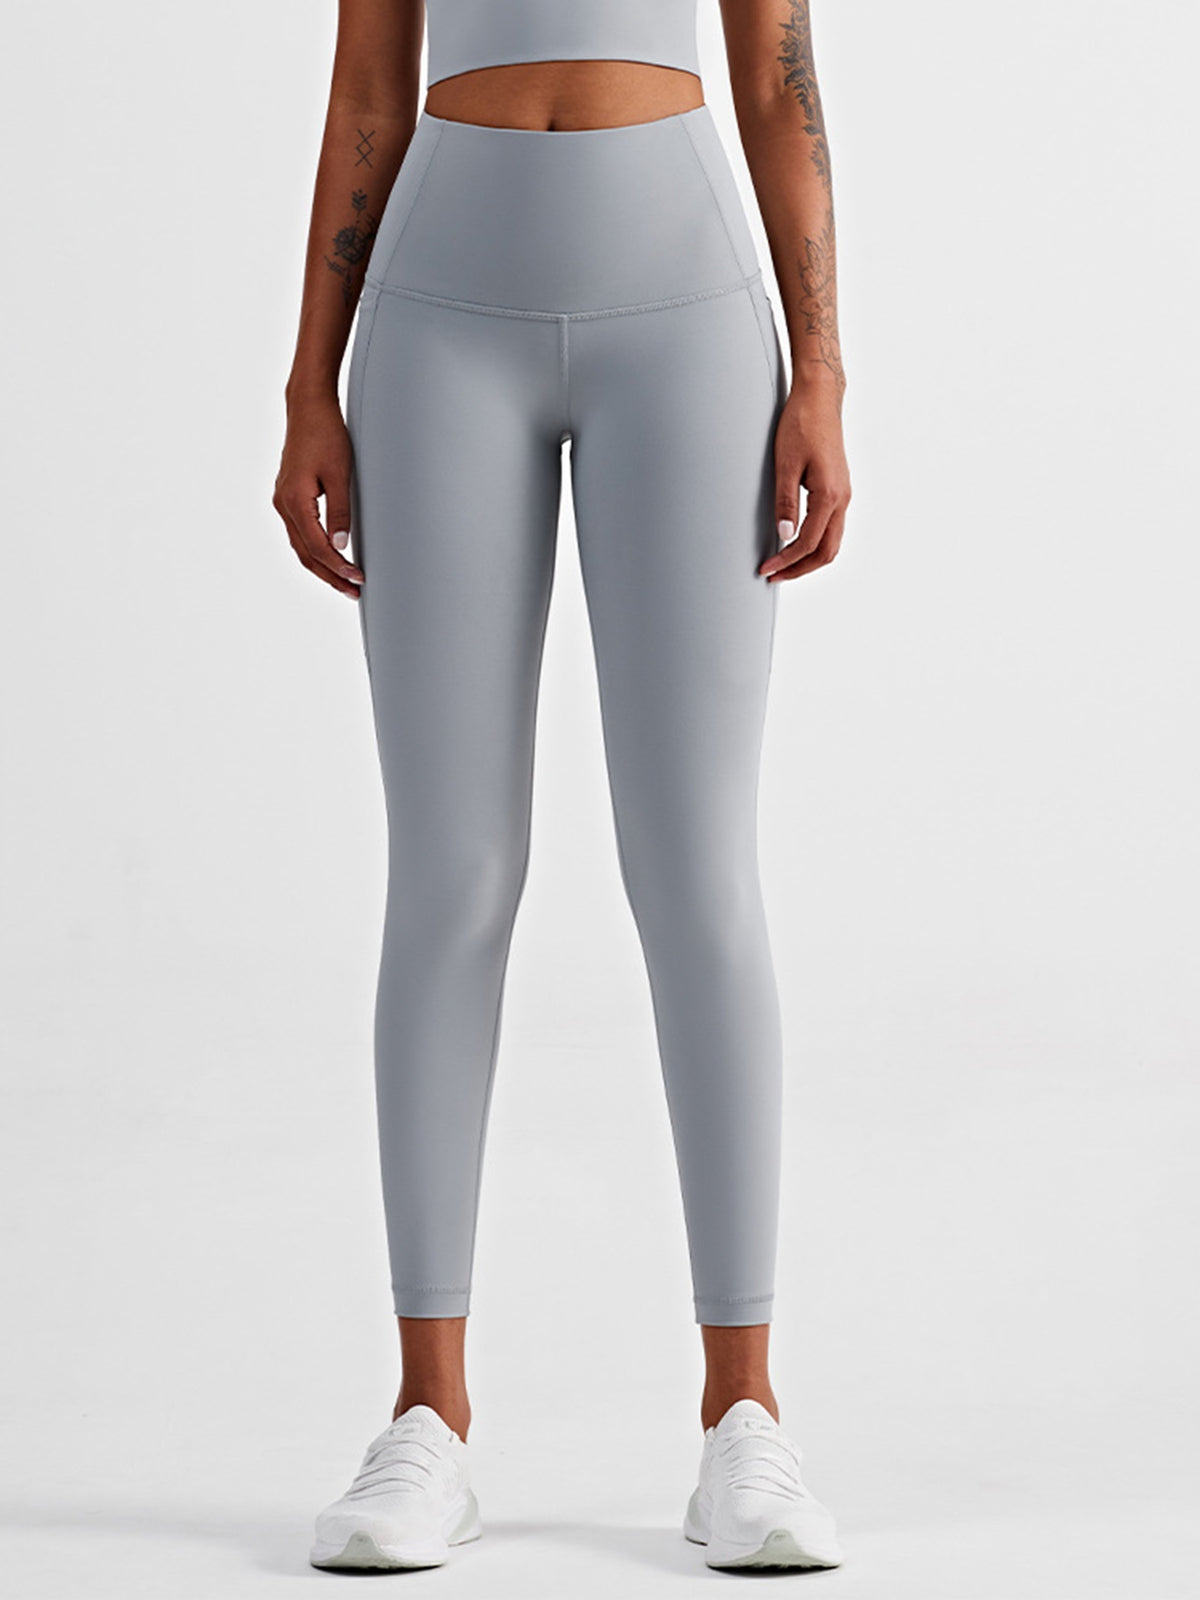 Women's sports yoga fitness pocket high waist tight leggings peach buttocks tummy lifting yoga pants women's pants